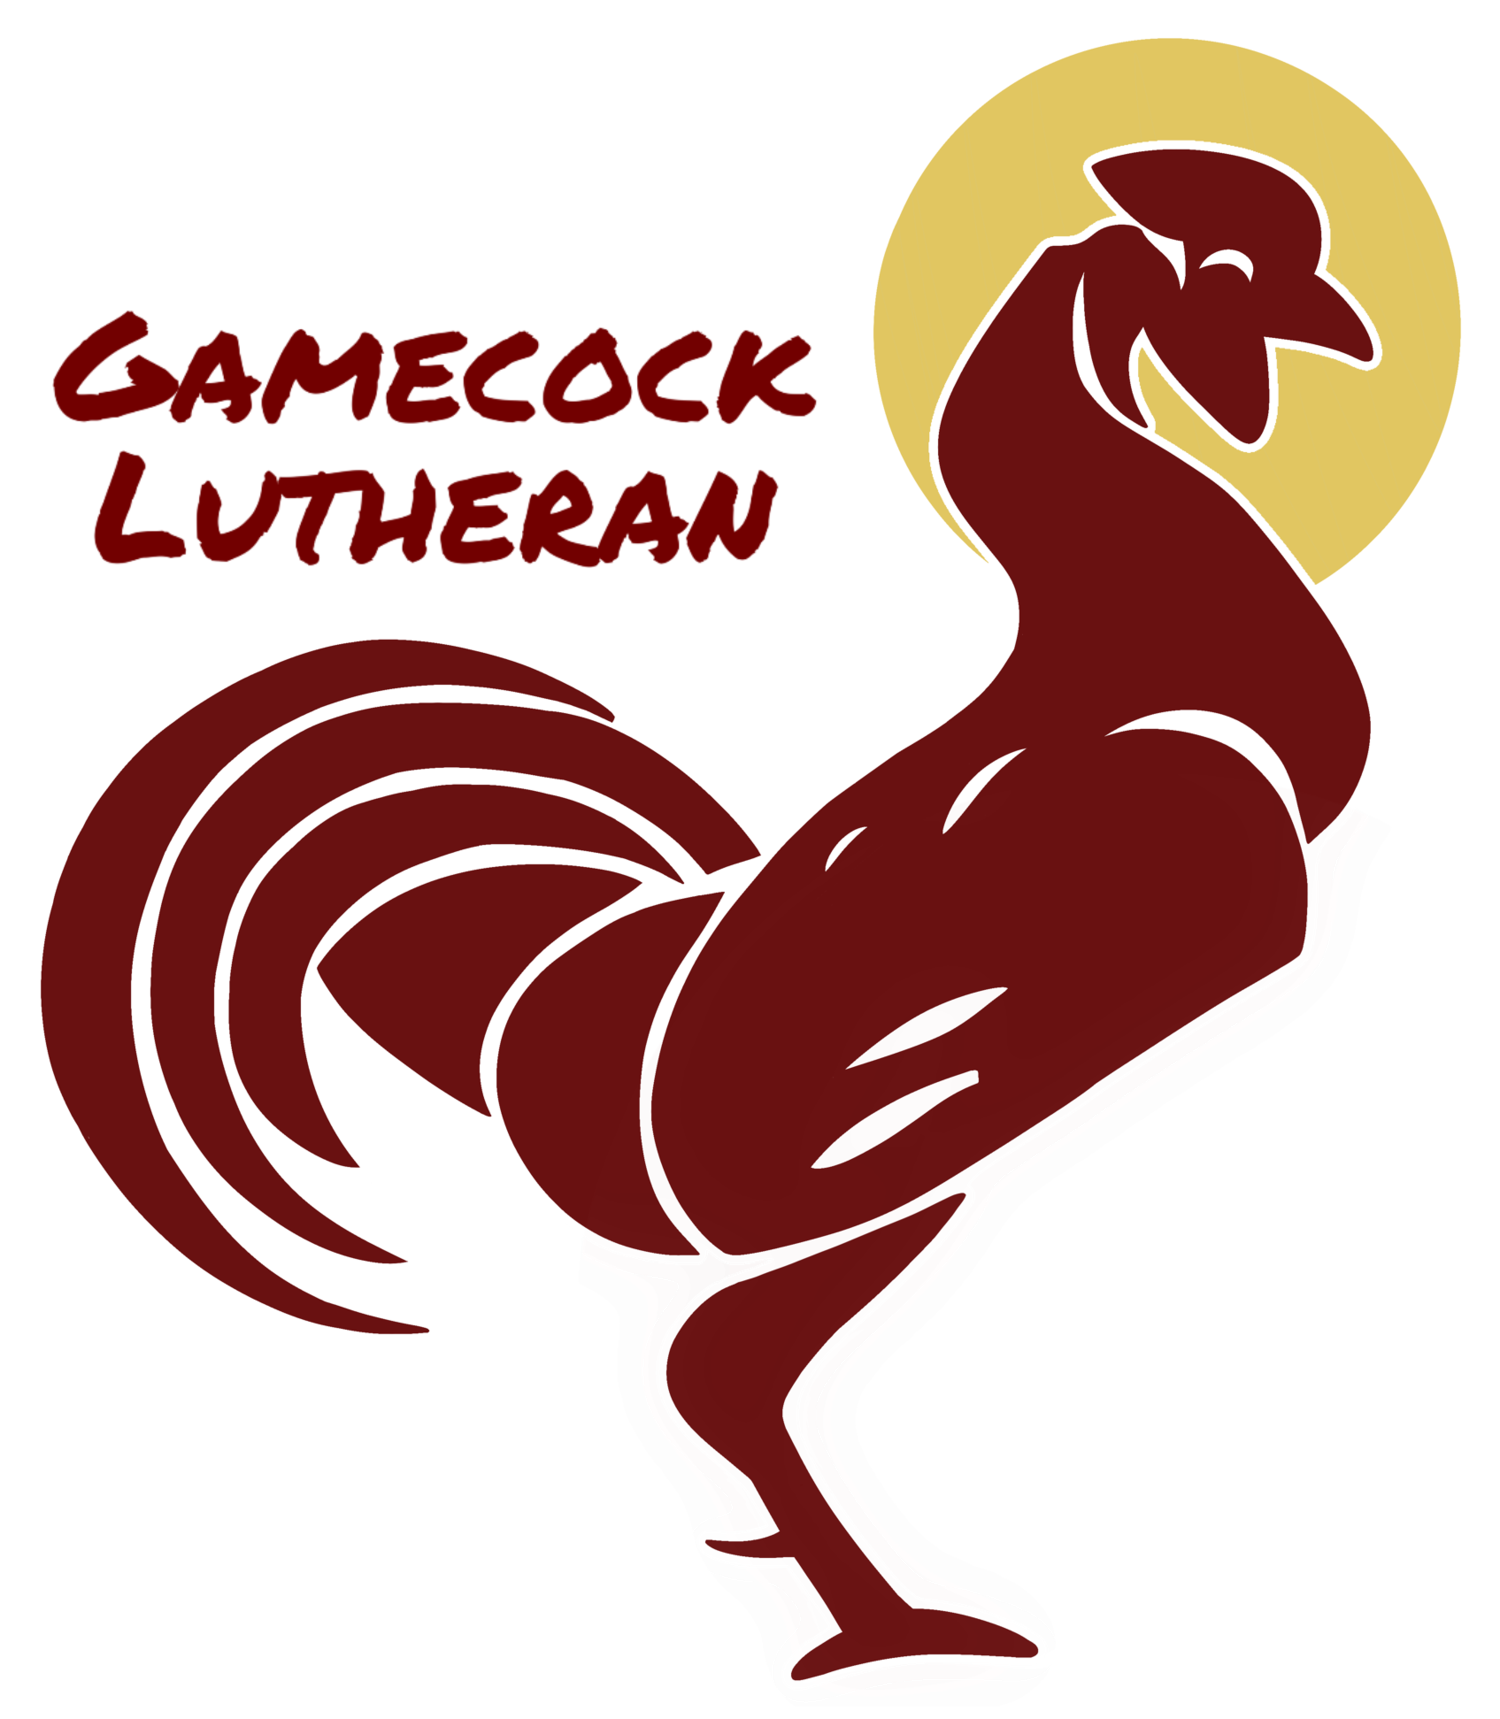 Gamecock Lutheran